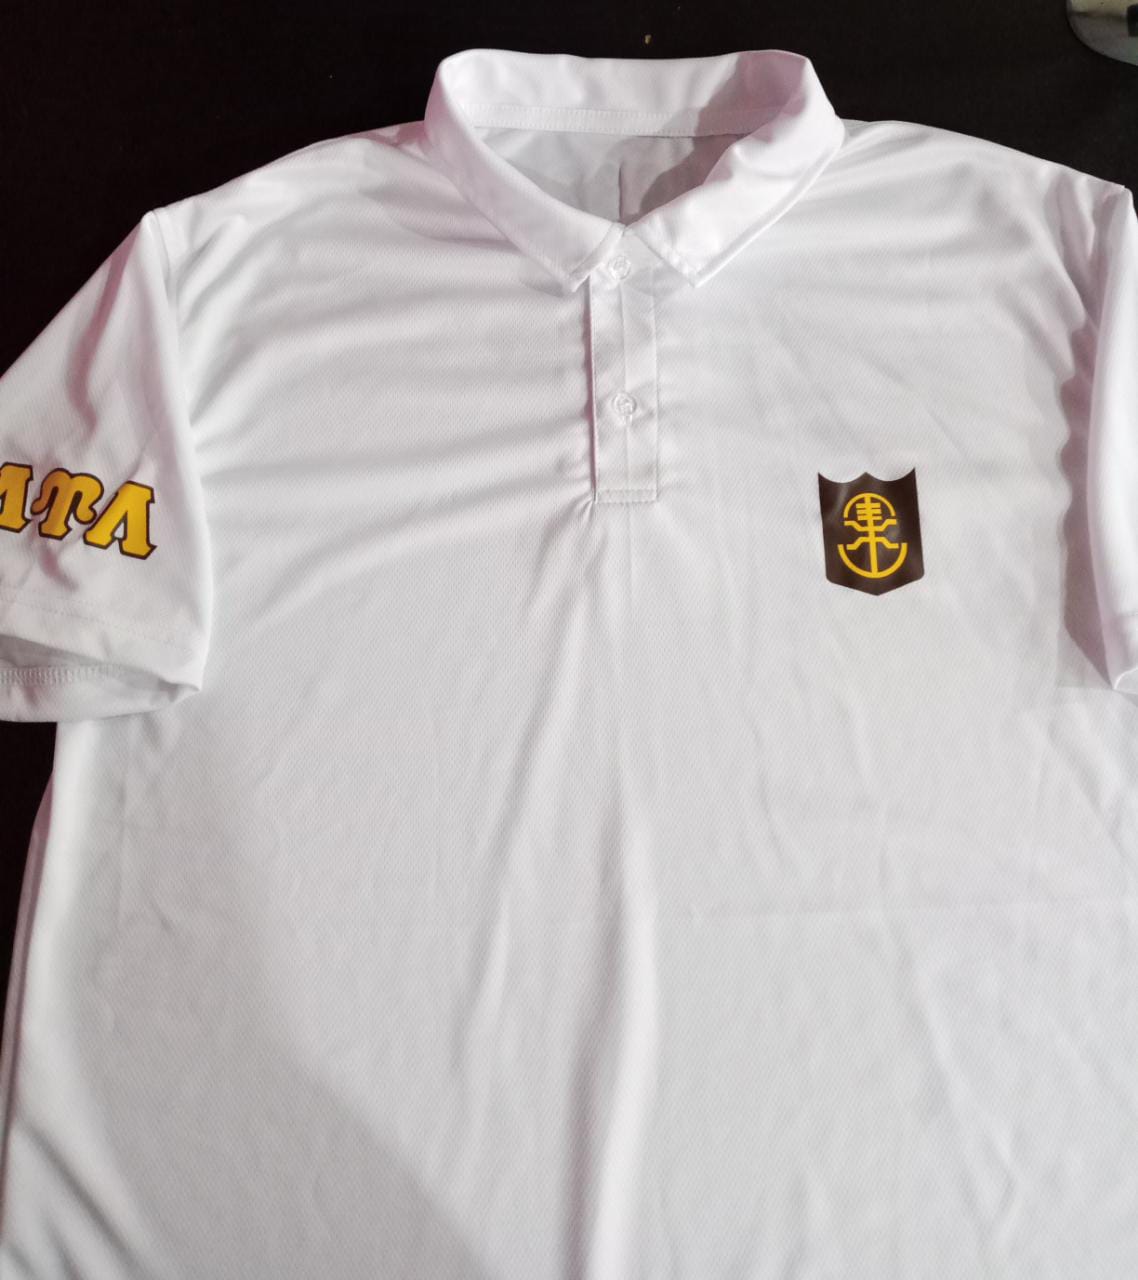 White LUL Golf Shirt - Vinyl Logos